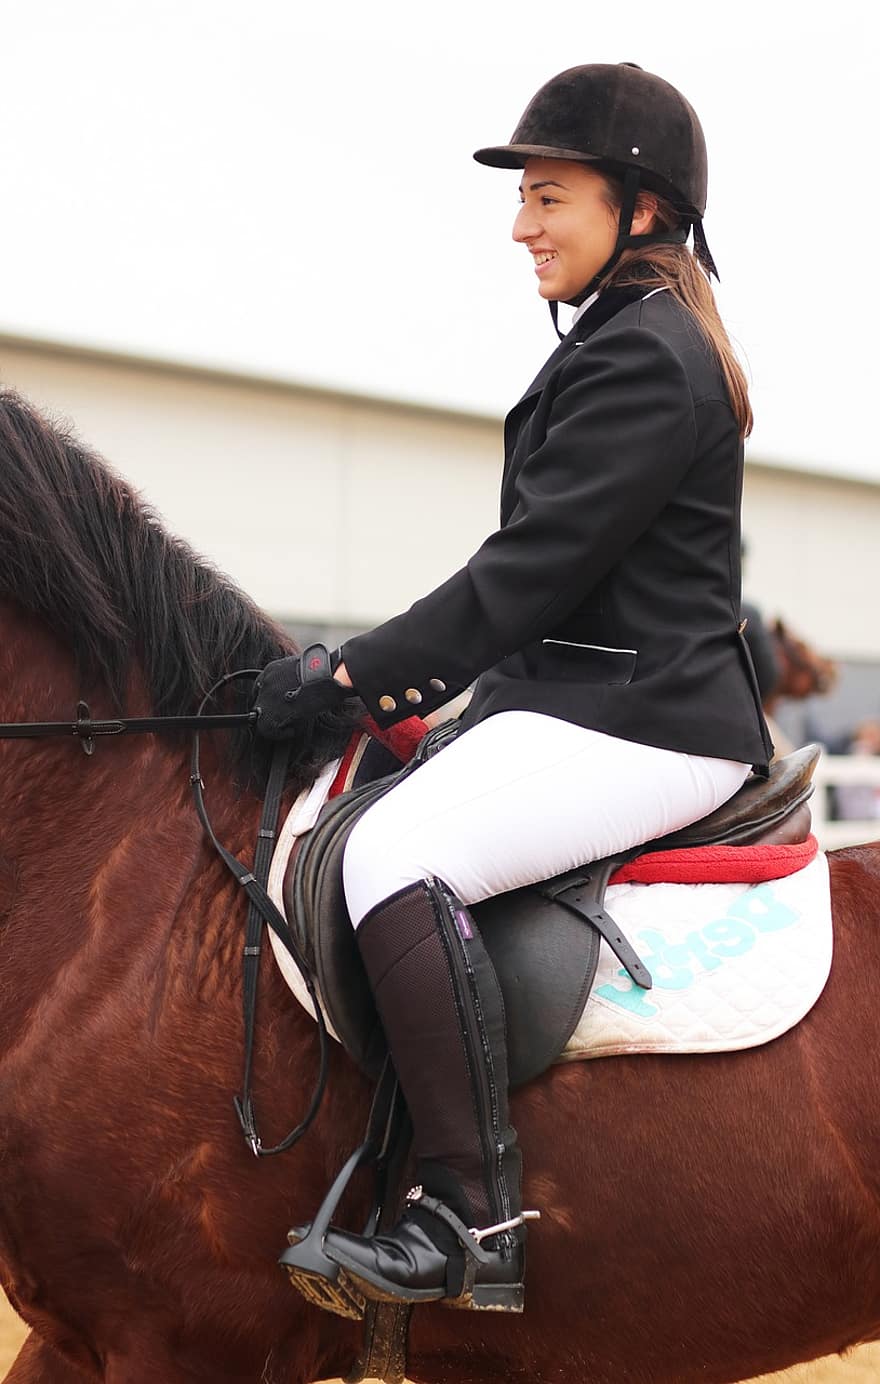 Woman, Rider, Horse, Equine, Equestrian, Saddle, Animal, Farm, Sport, Exercise, Athlete